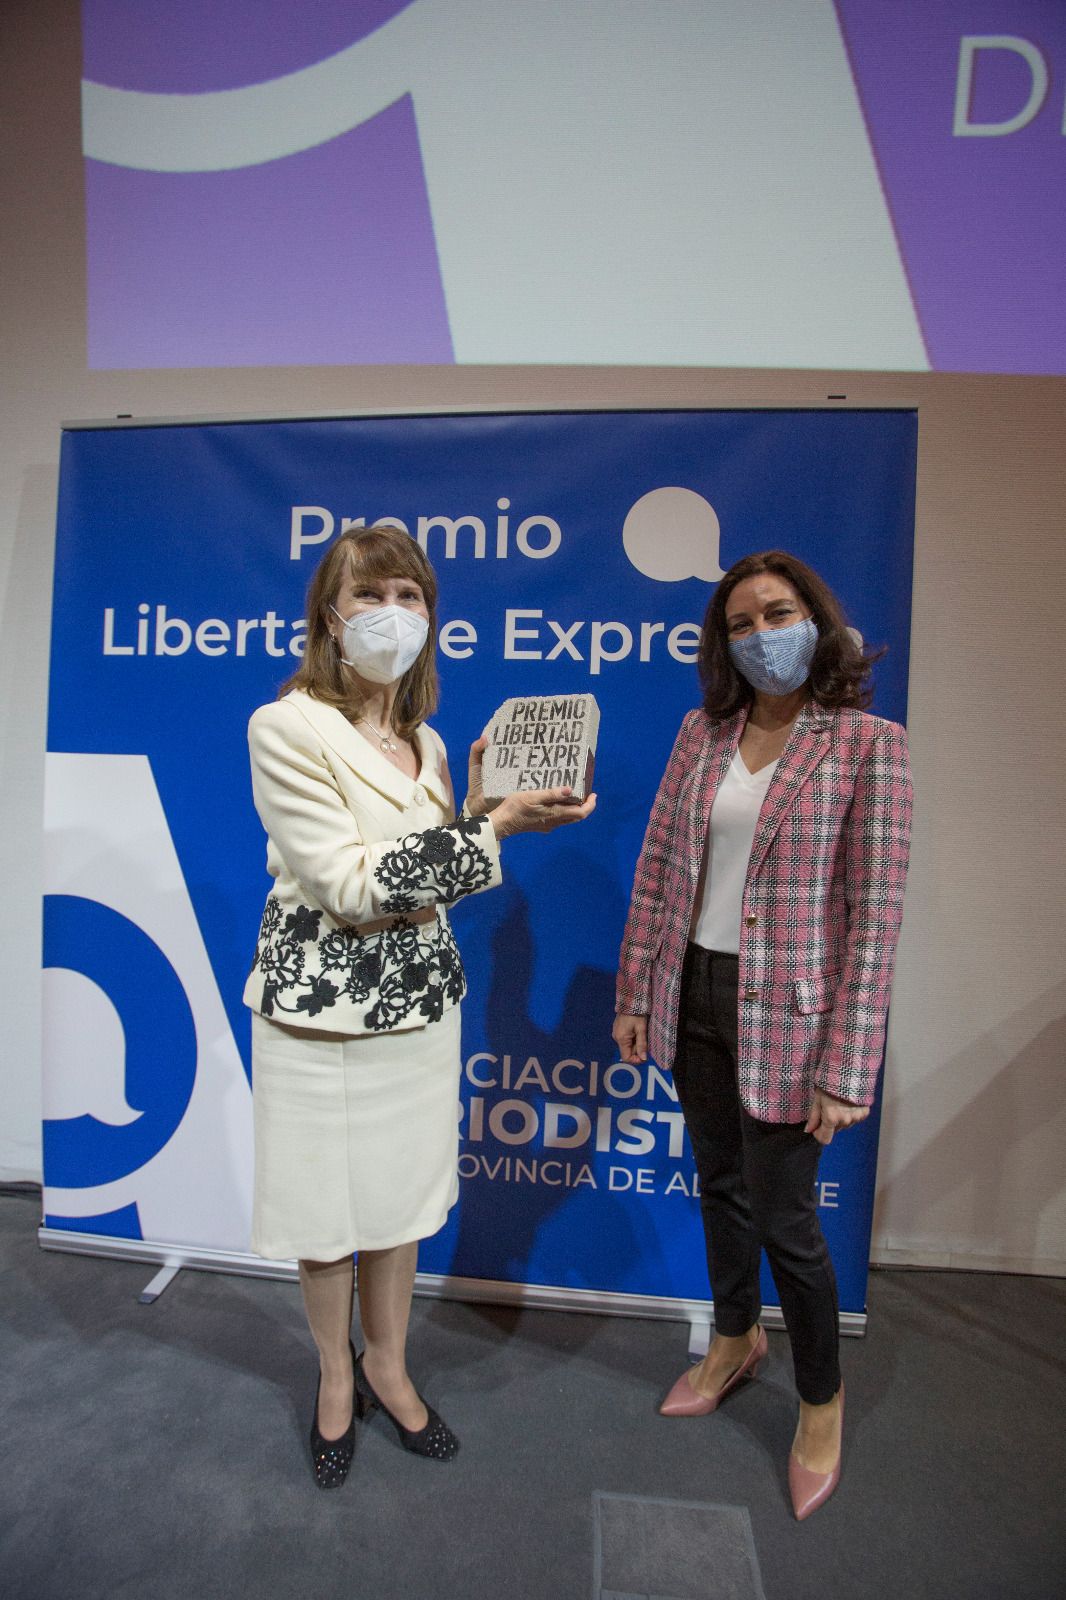 La Asociación de Prensa de Alicante entrega el IV Premio Libertad de Expresión a Asunción Valdés